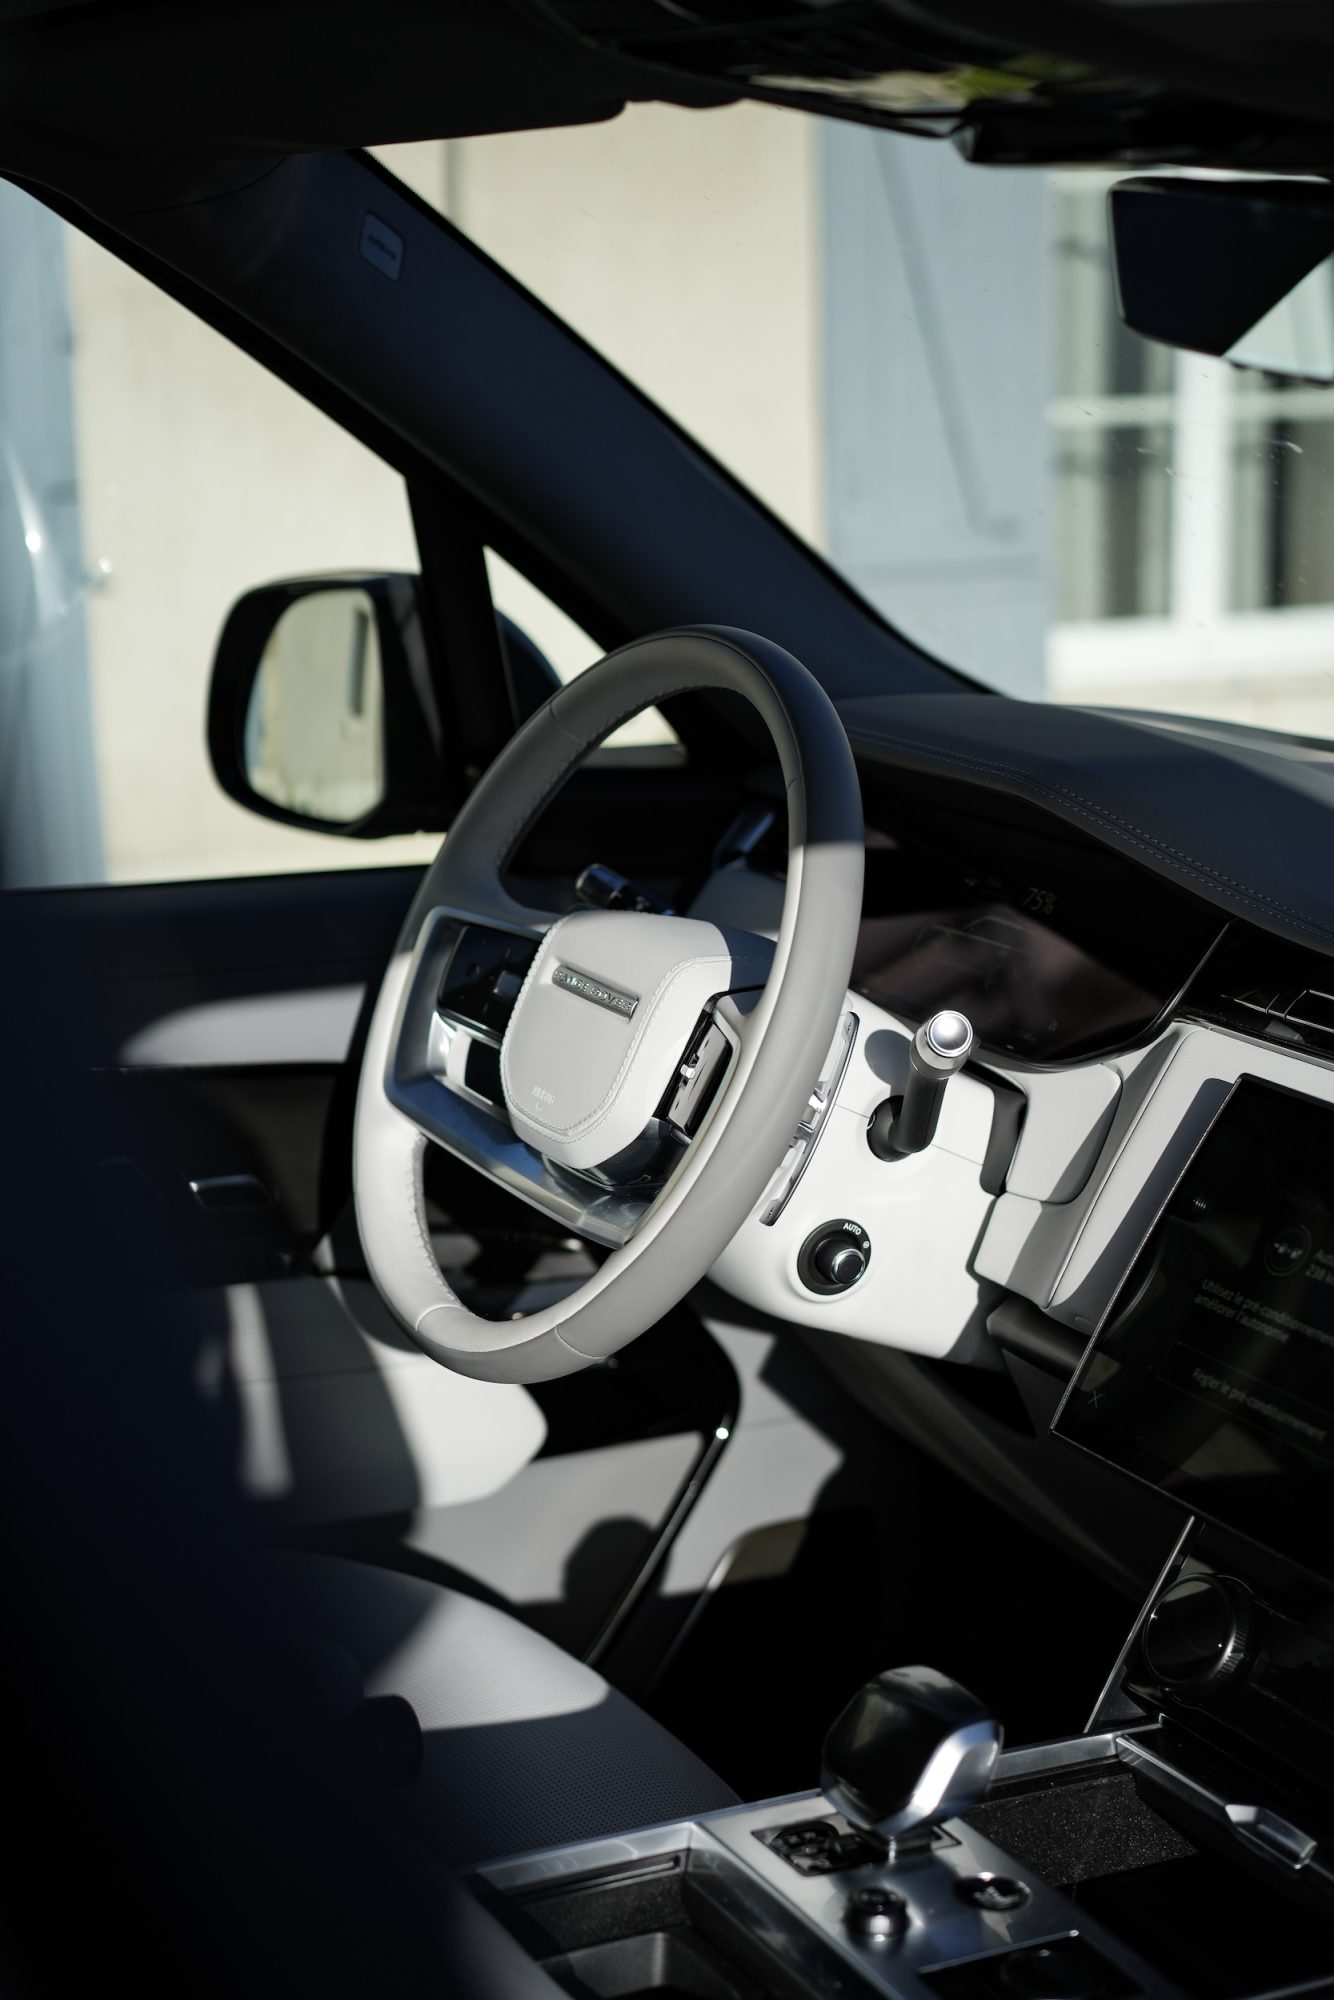 Range Rover SV interieur volant